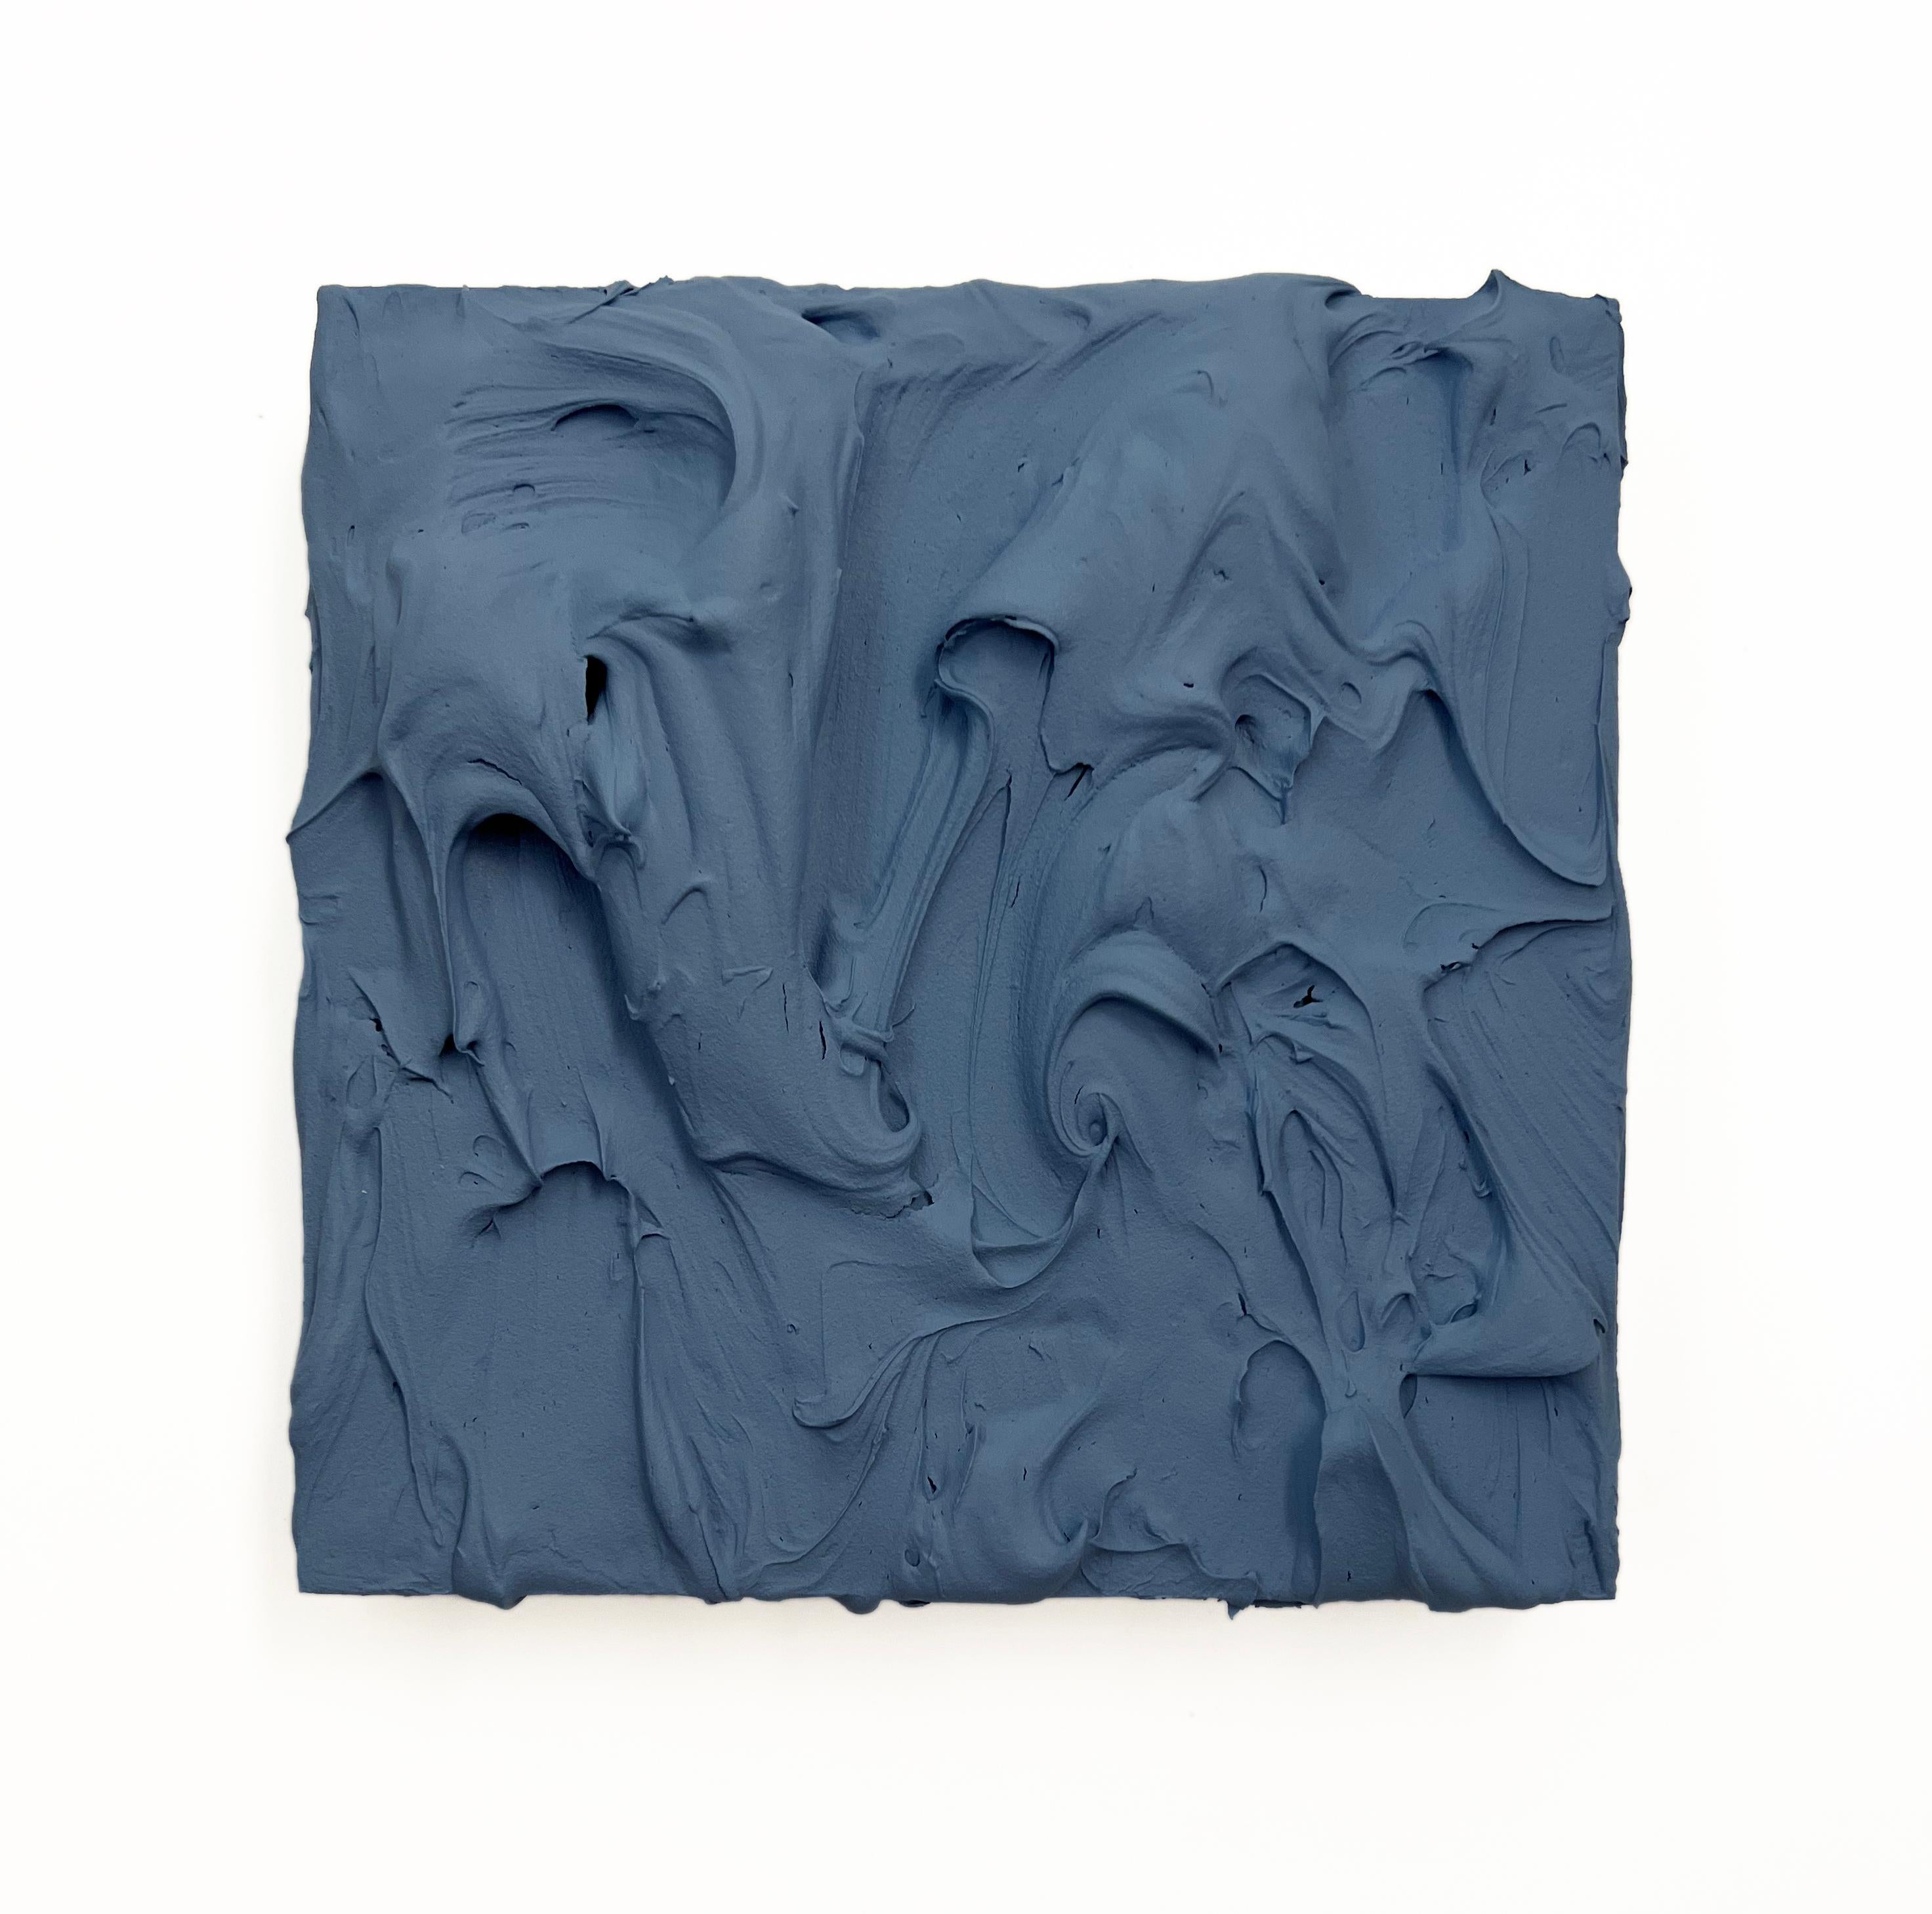 Fog Blue Excess (indigo impasto thick painting monochrome pop art square design)